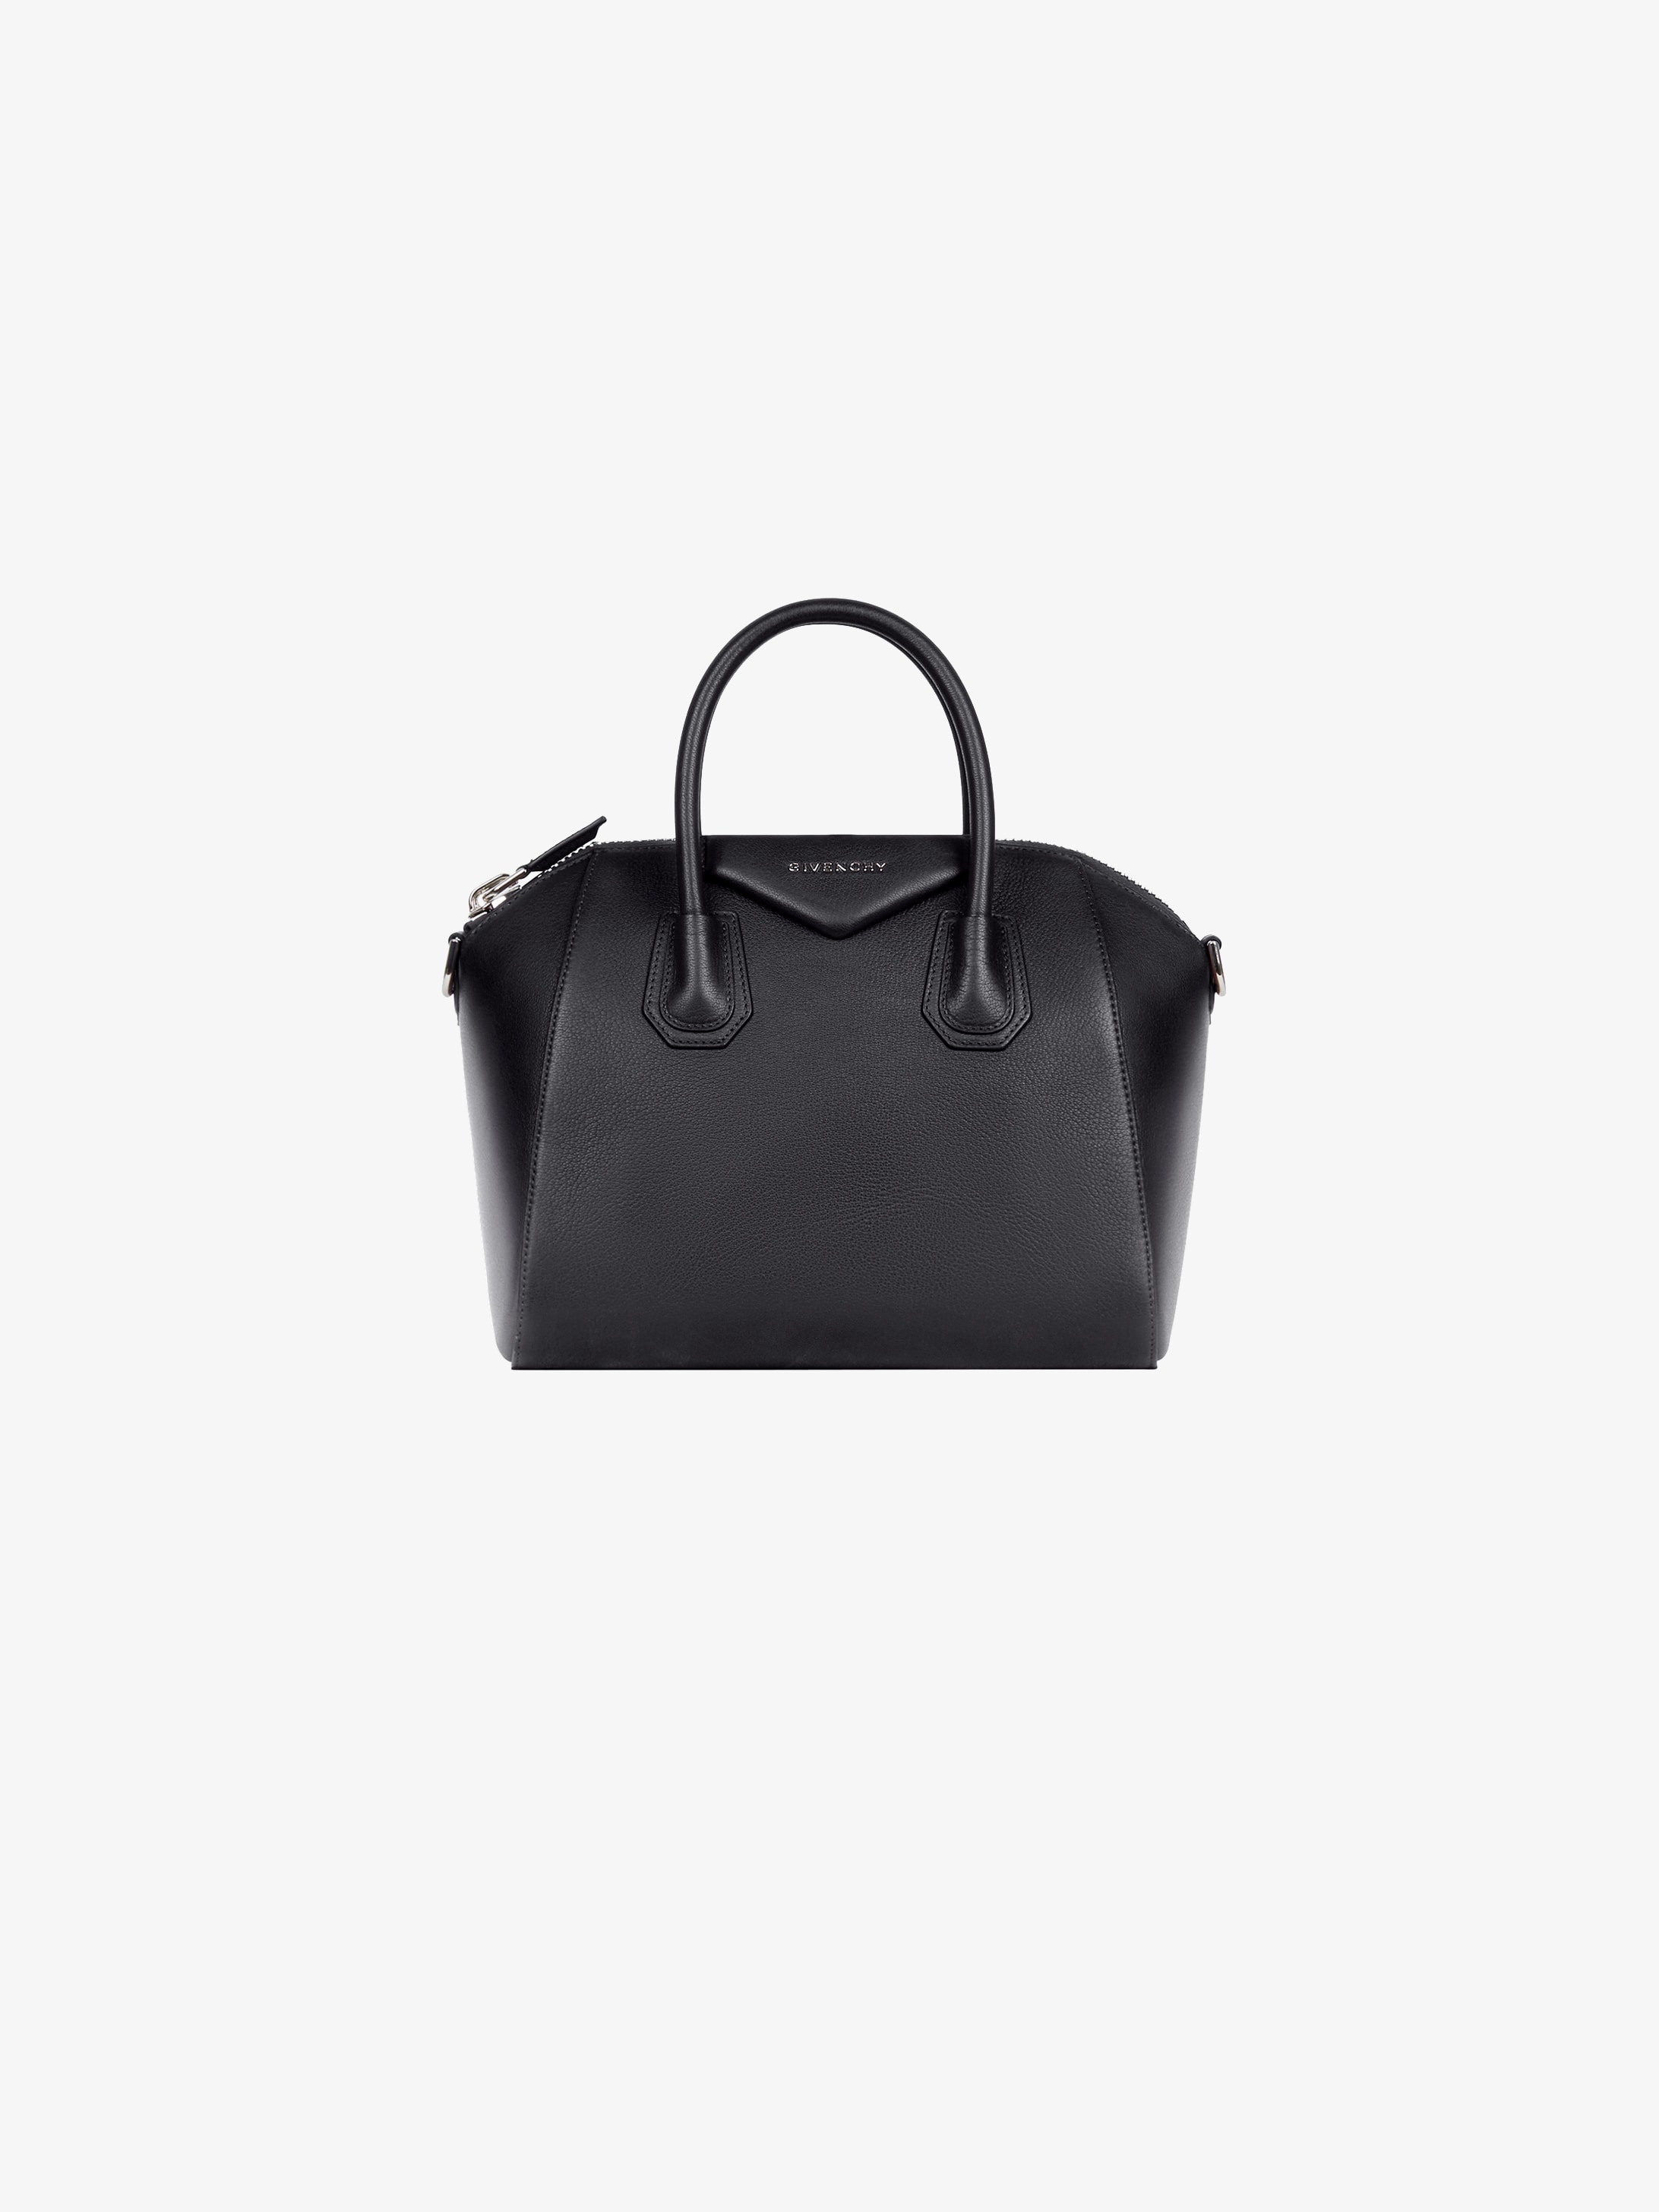 Givenchy Small Antigona bag | GIVENCHY 